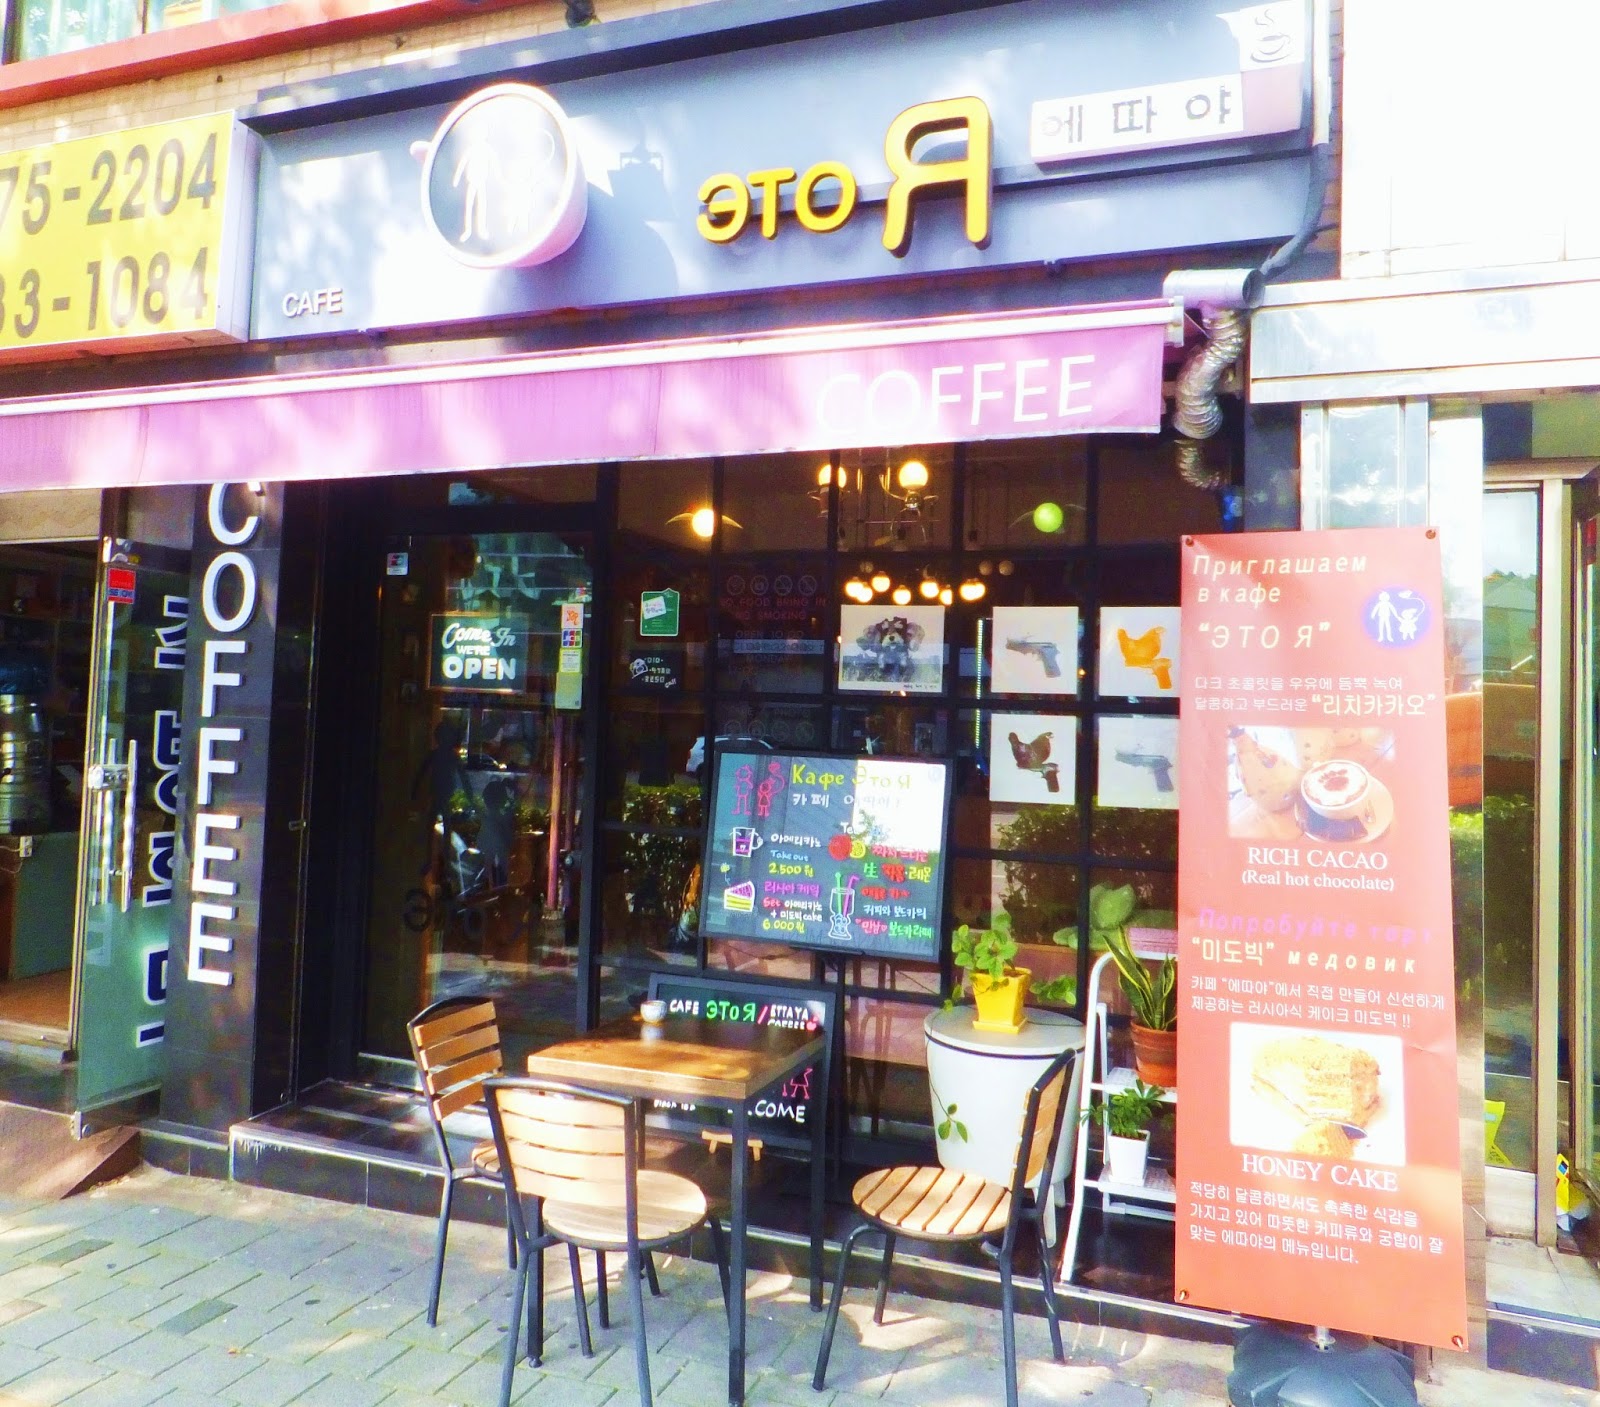 Happydalkis: 11 Sep 2014 - A cafe near my apartment